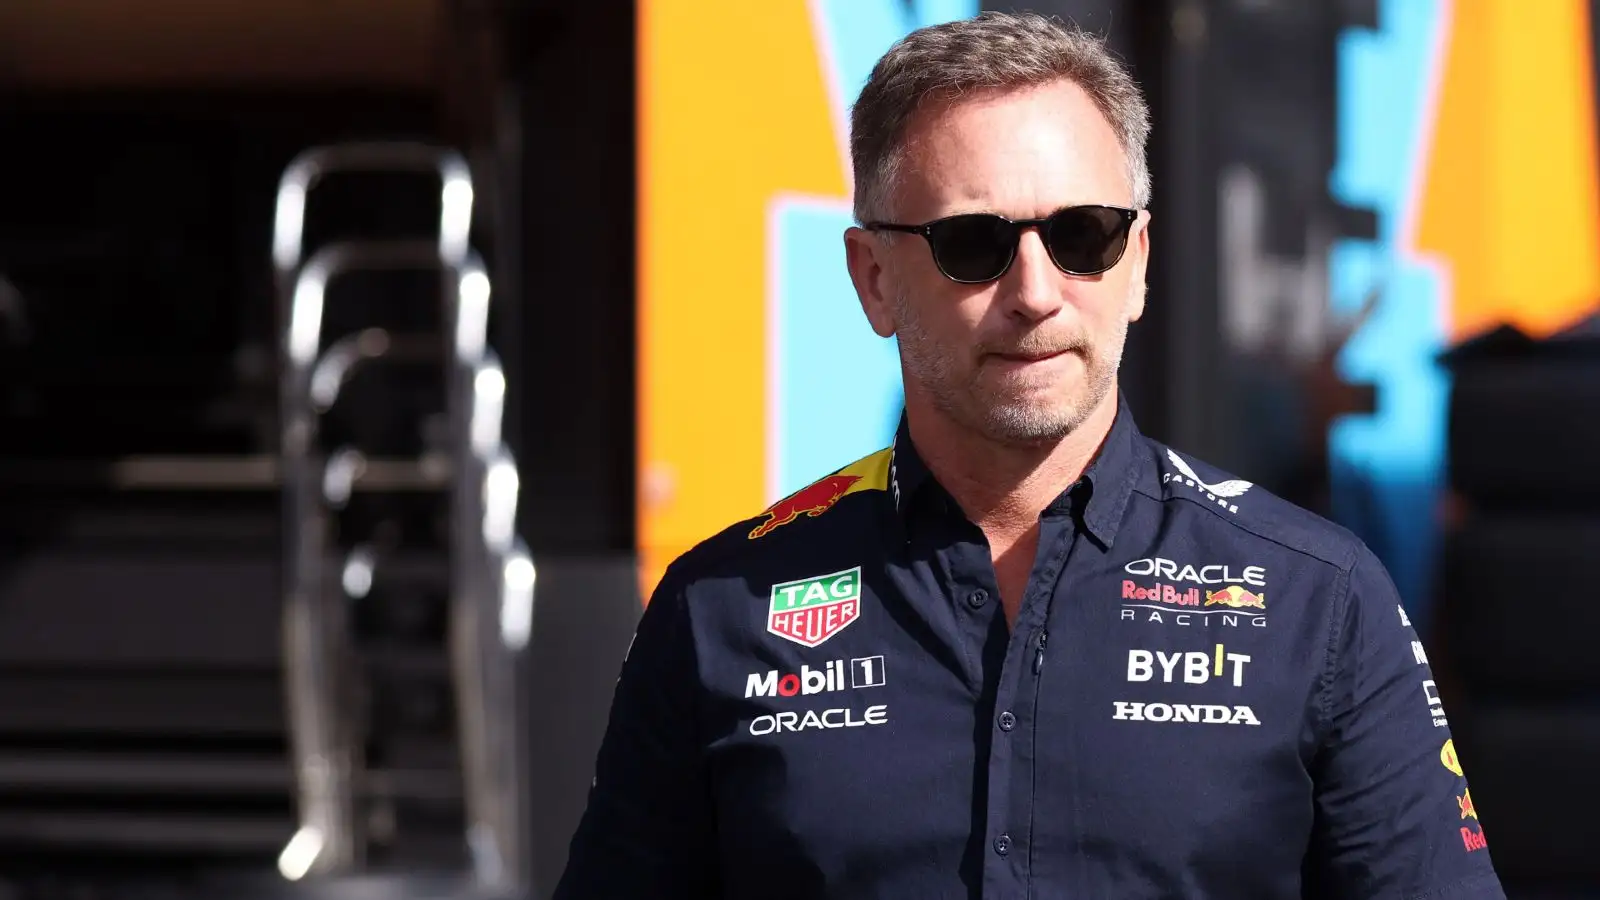 Red Bull boss Christian Horner, wearing sunglasses, in the paddock at the Italian Grand Prix.